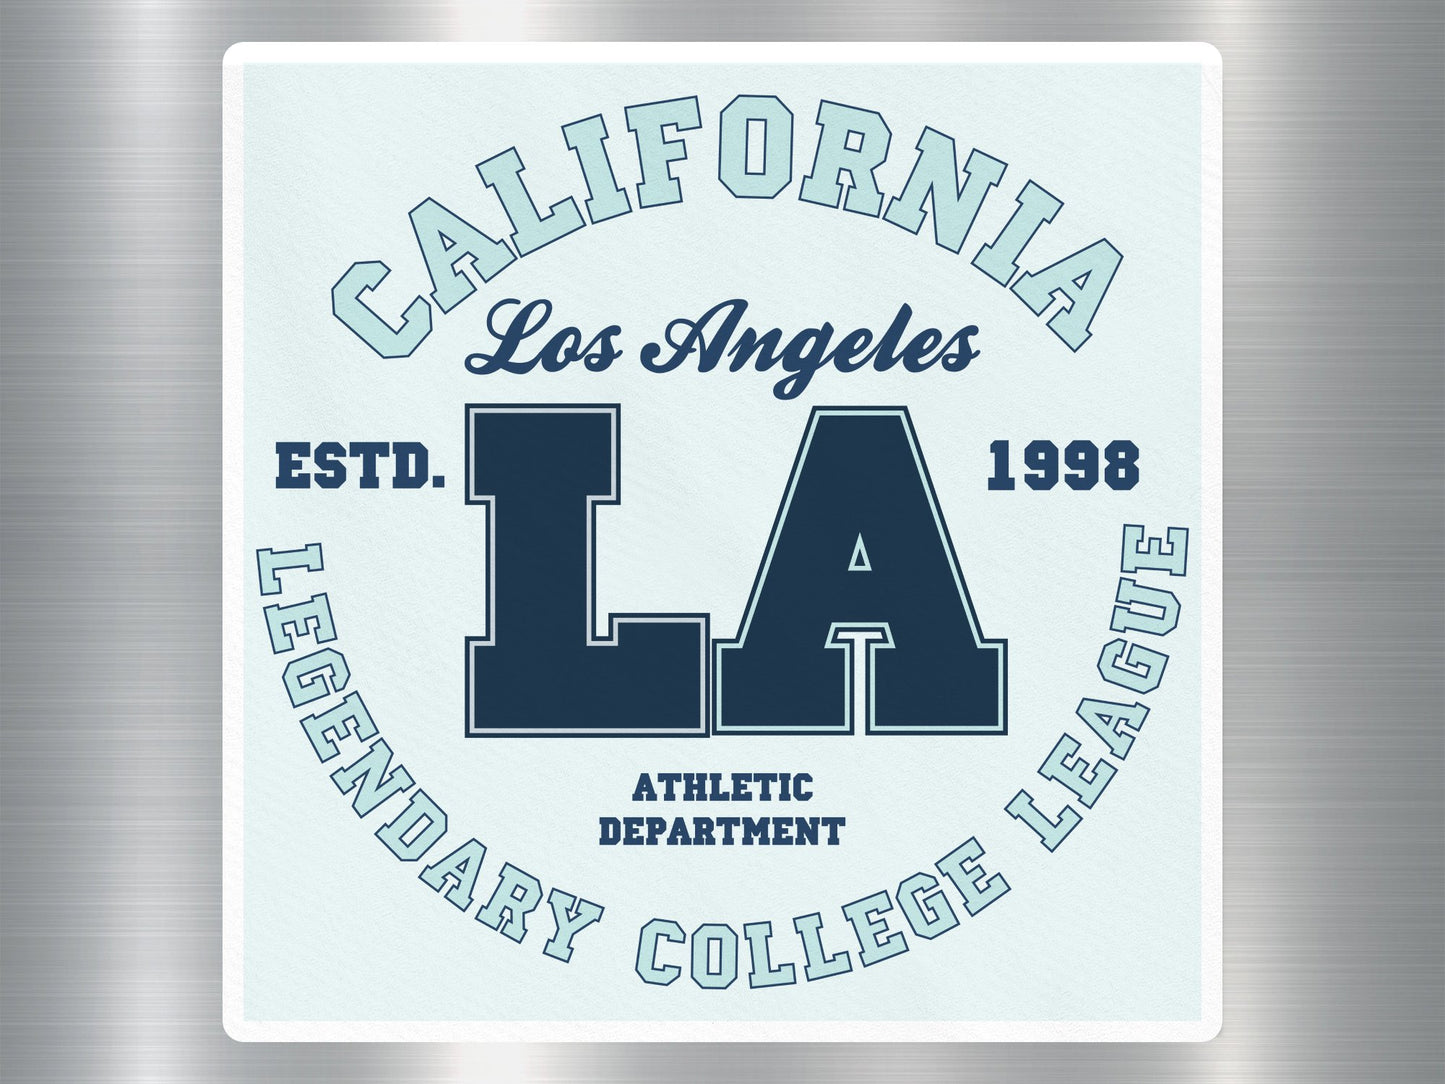 California Los Angeles Travel Sticker